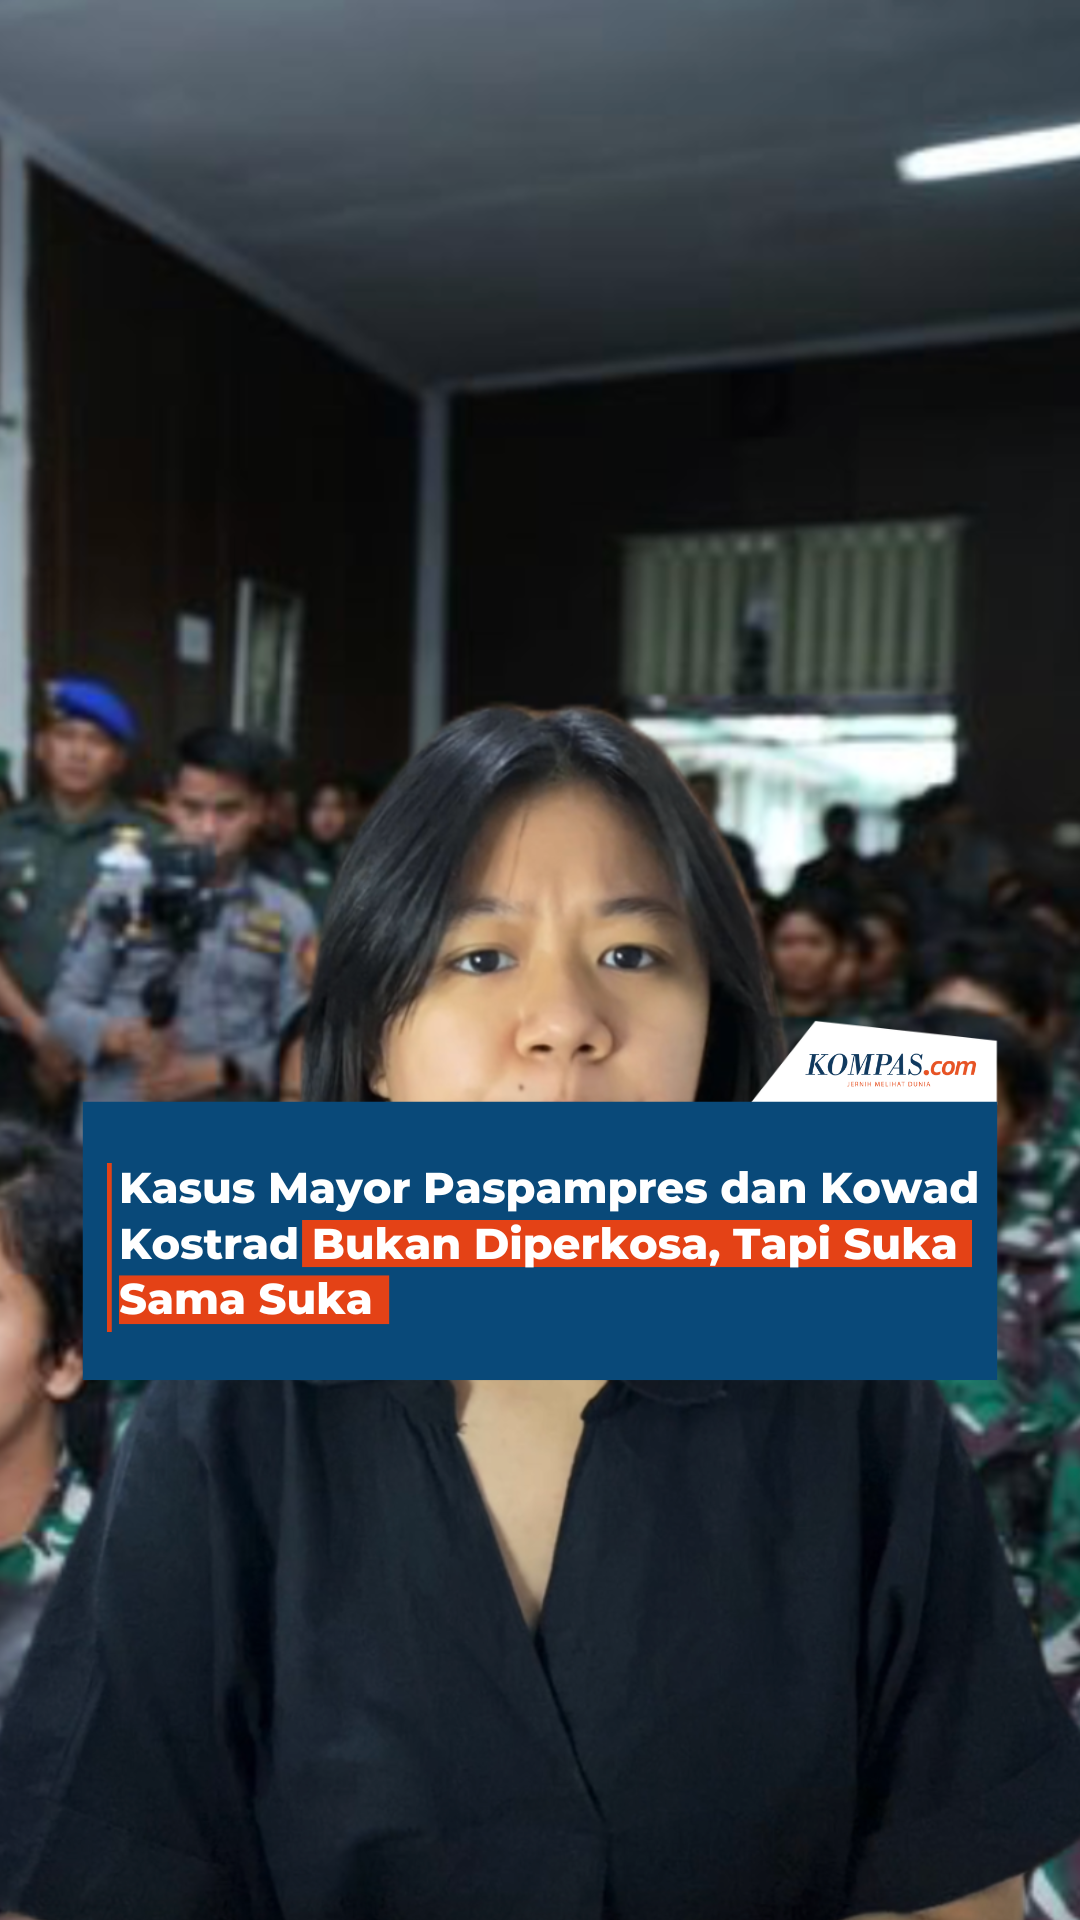 Kasus Mayor Paspampres dan Kowad Kostrad Bukan Diperkosa, Tapi Suka Sama Suka